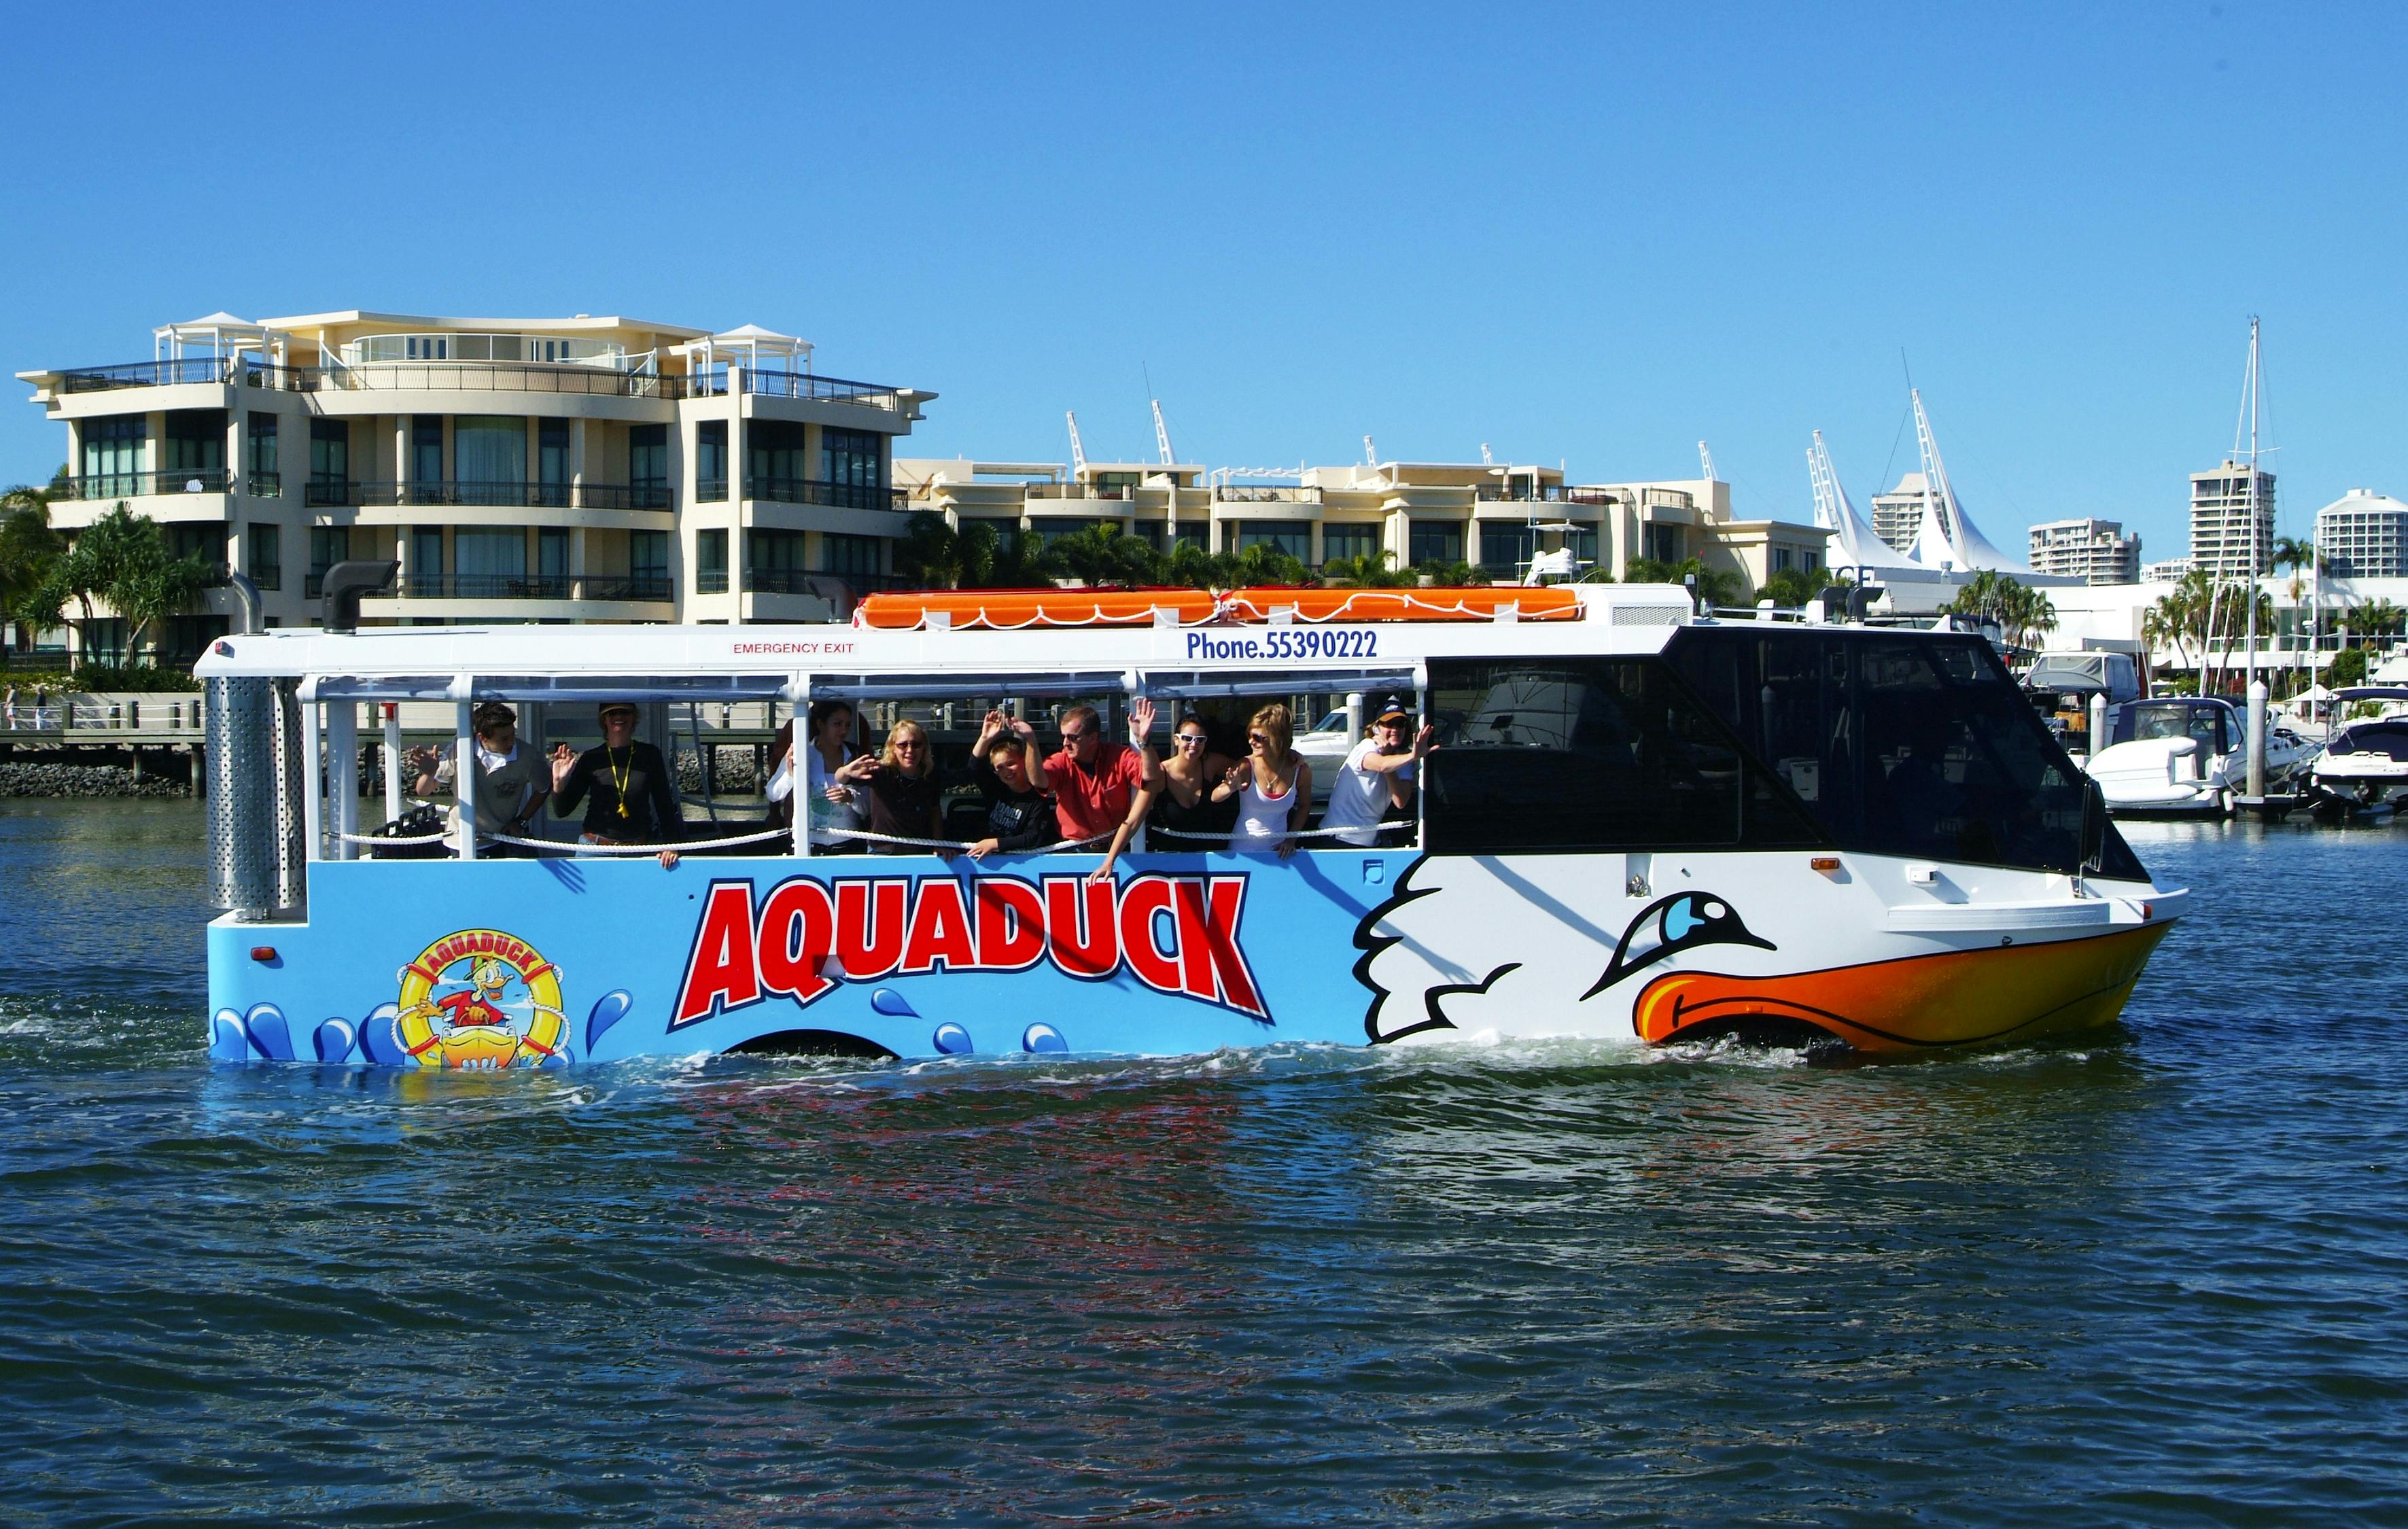 Aquaduck city and river tour